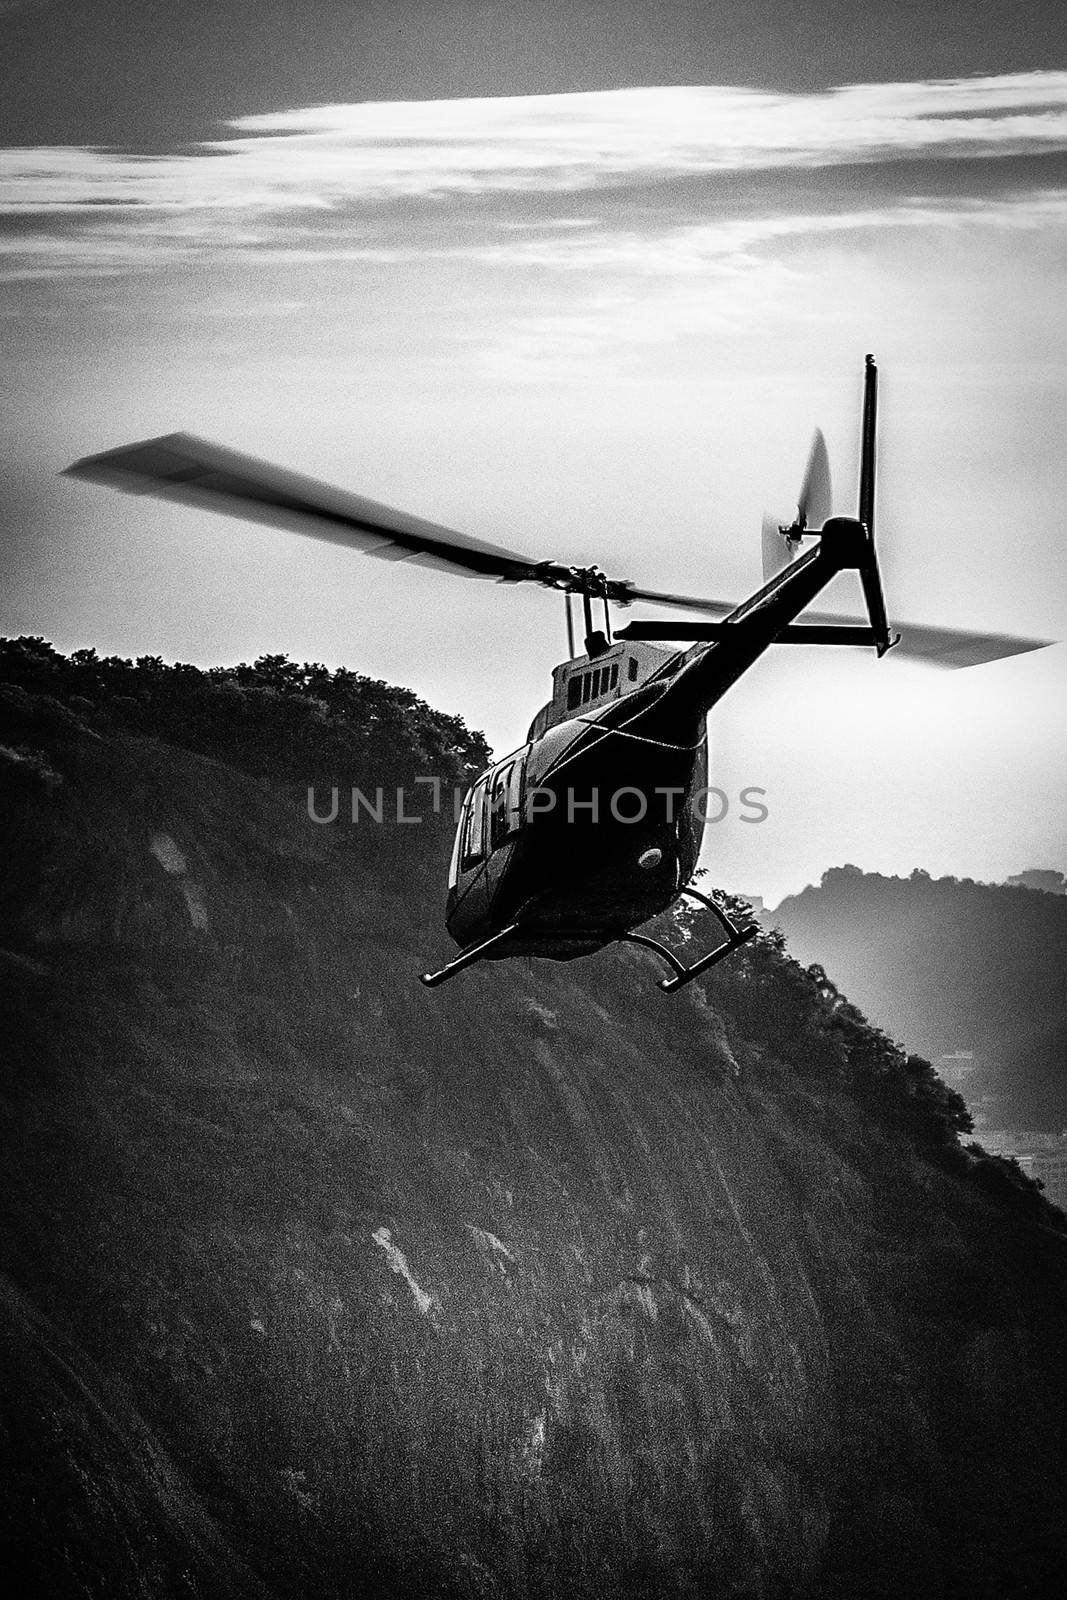 Helicopter in flight by CelsoDiniz